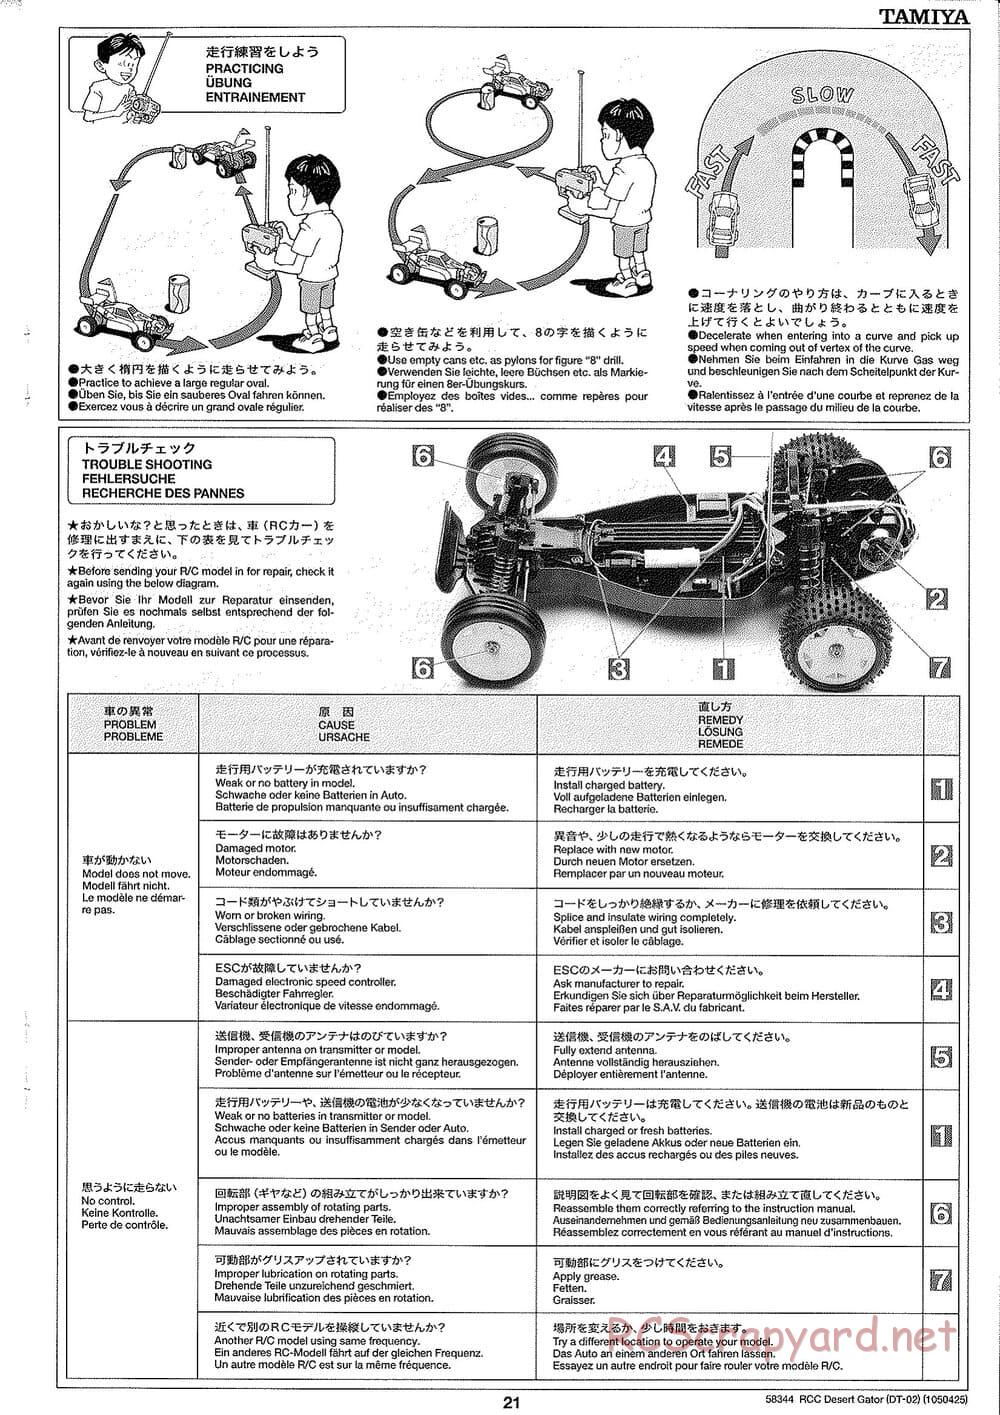 Tamiya - Desert Gator Chassis - Manual - Page 21